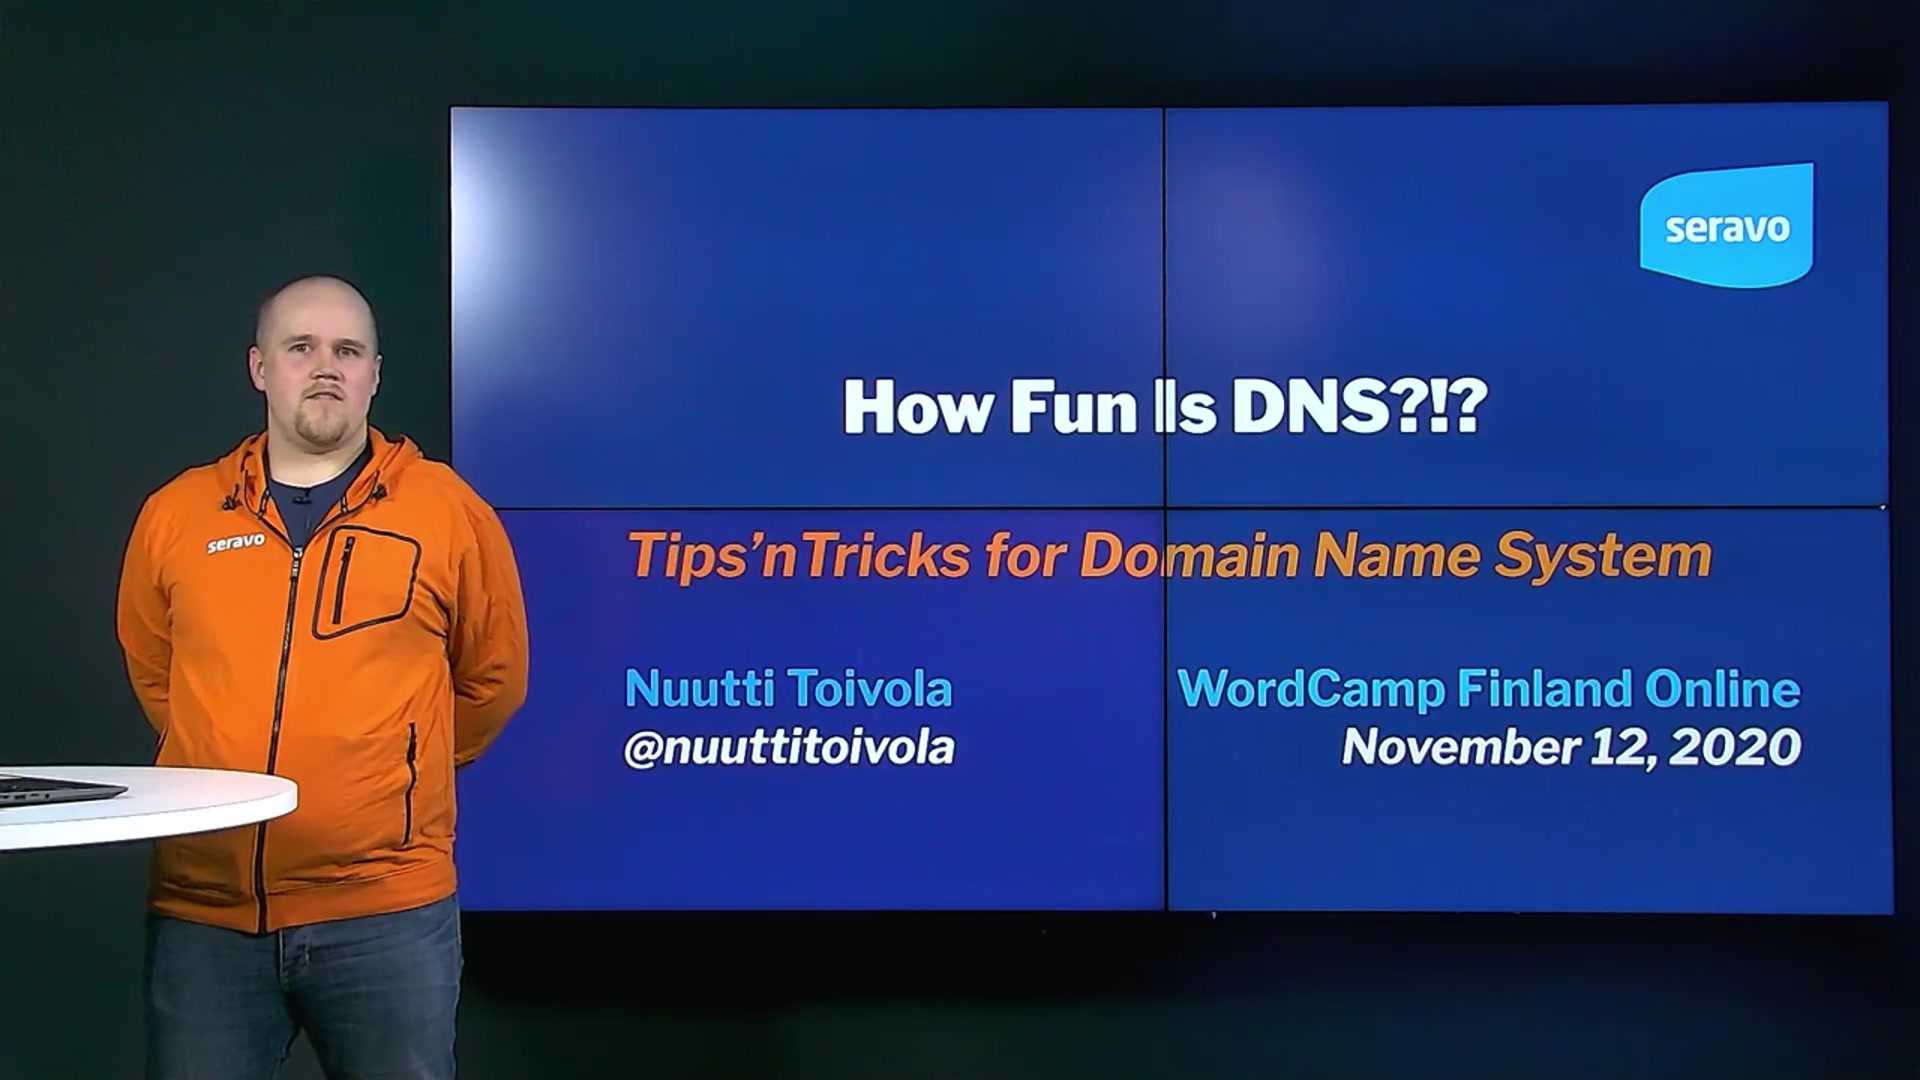 Nuutti Toivola: How fun is DNS?